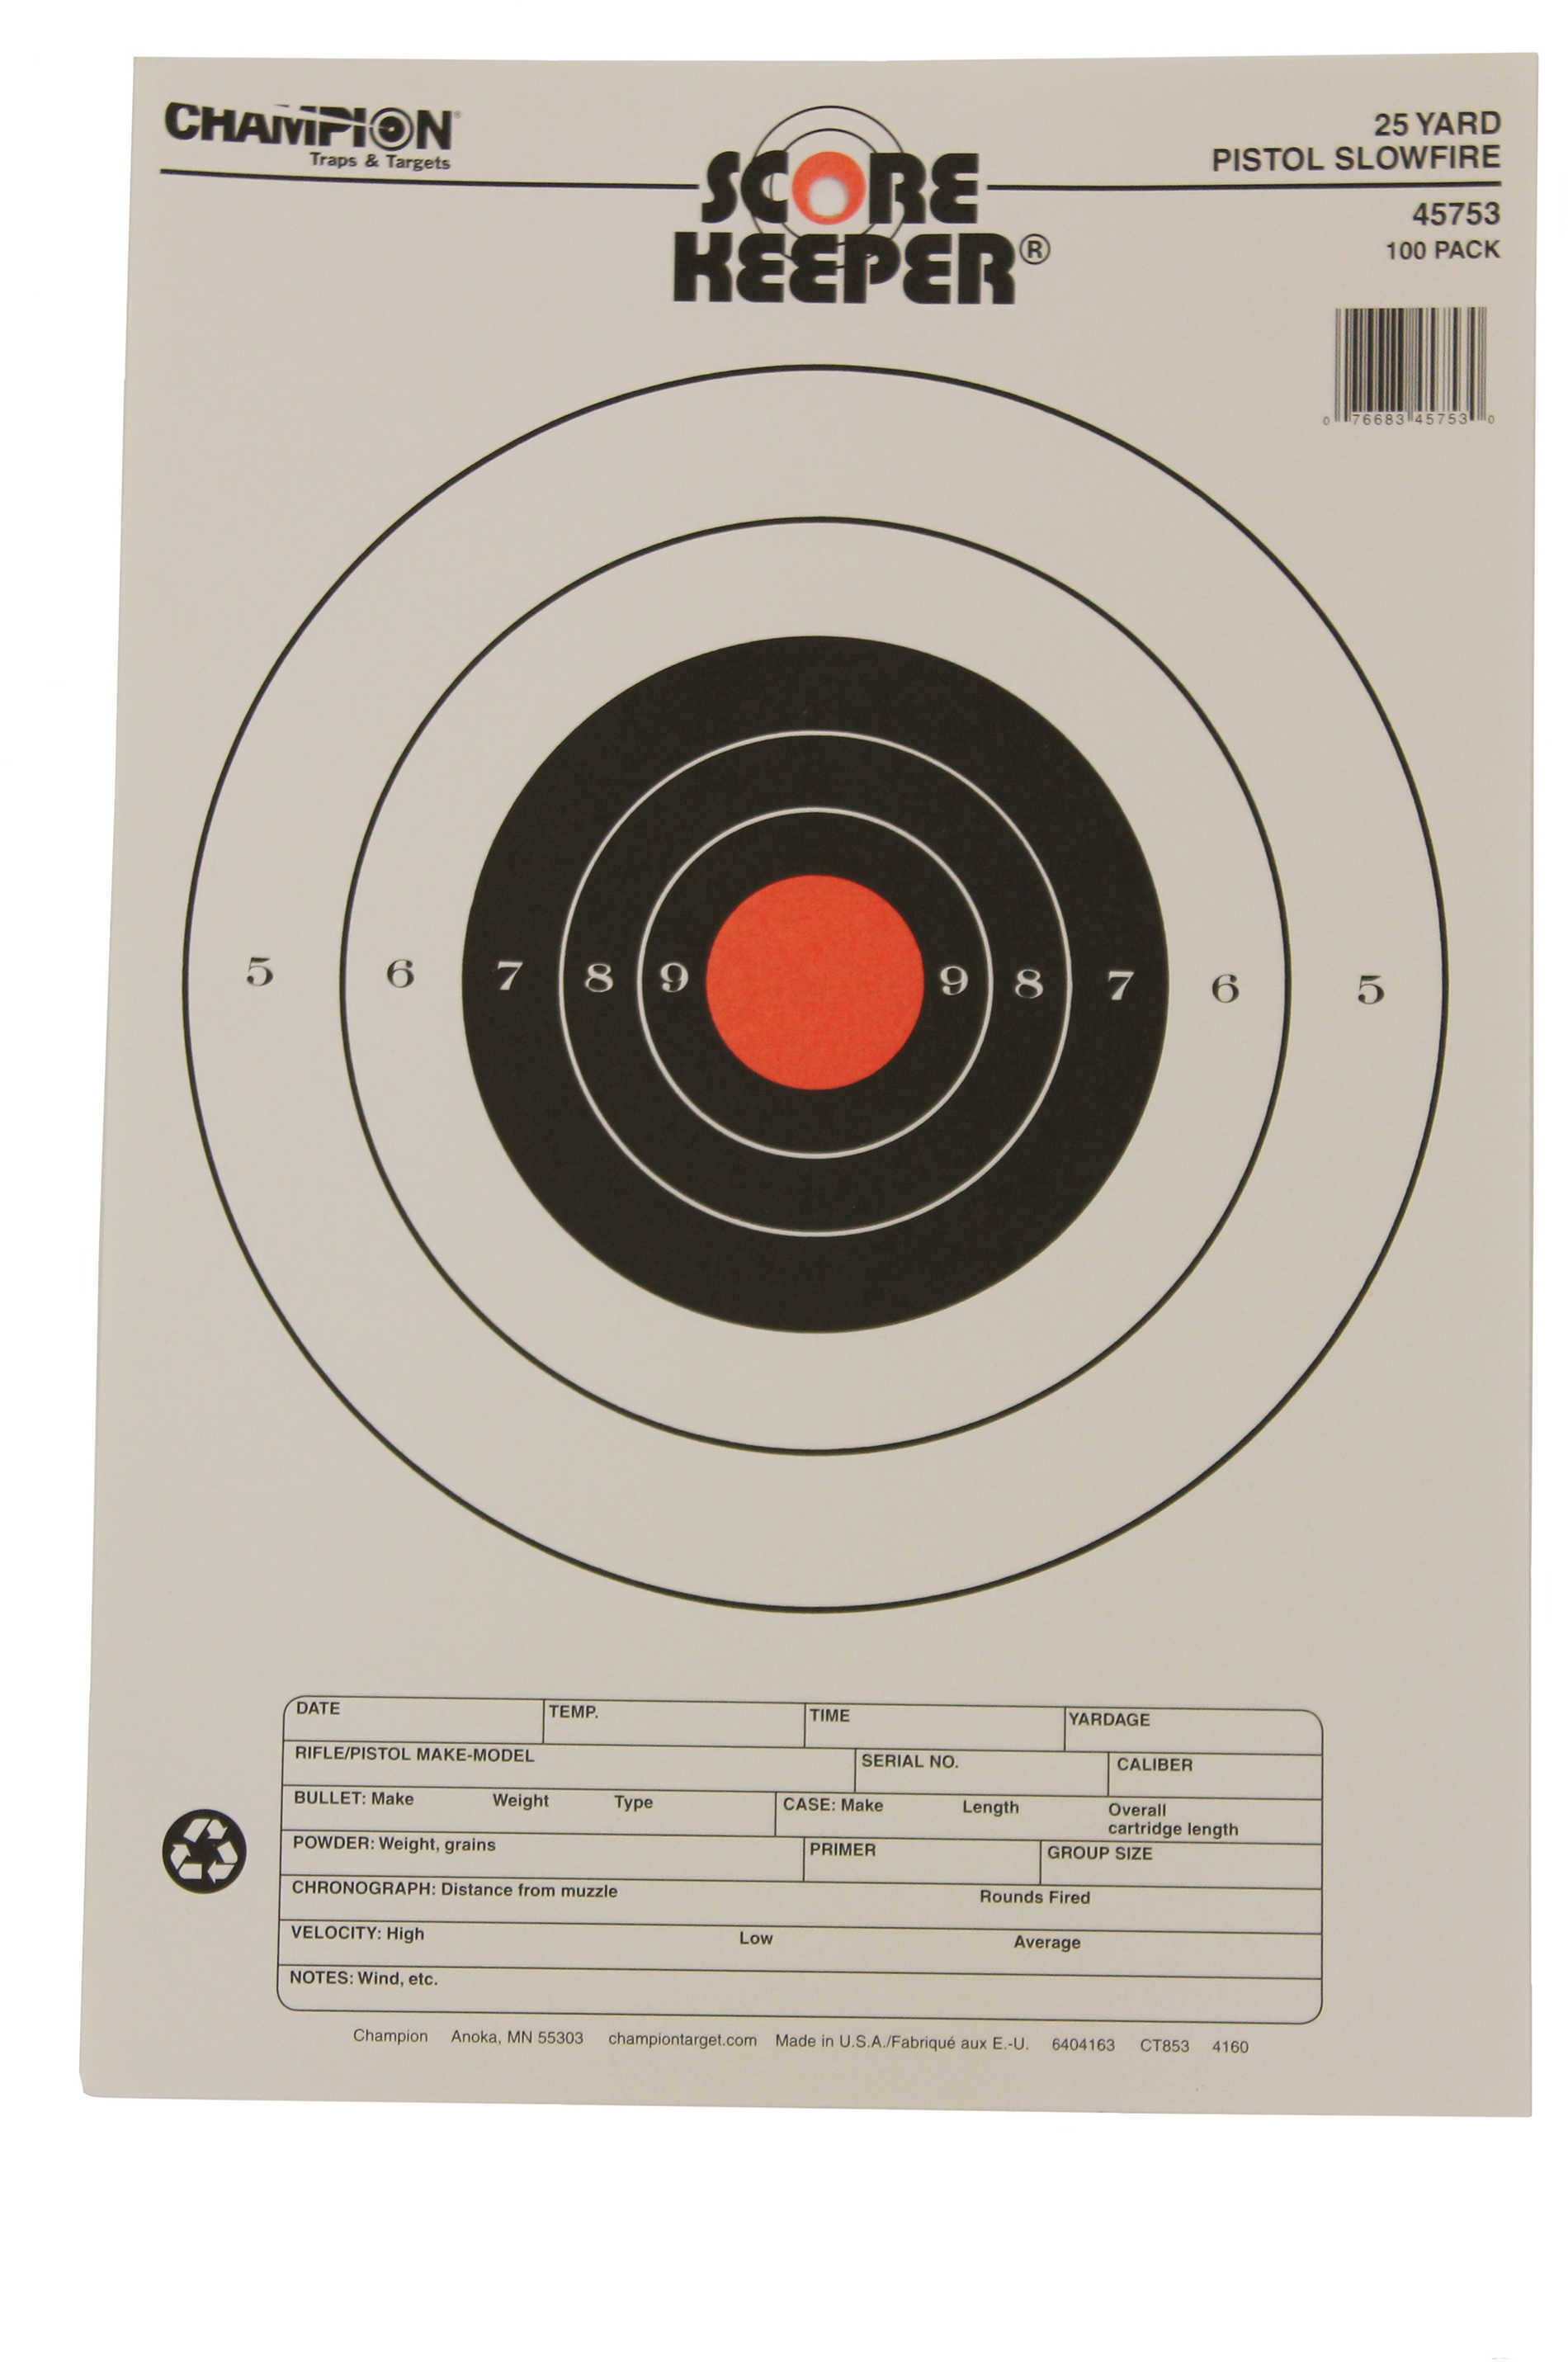 Champion Scorekeeper Targets Fluorescent Orange Bull - 25 Yd. Pistol Slow Fire 100/Pack